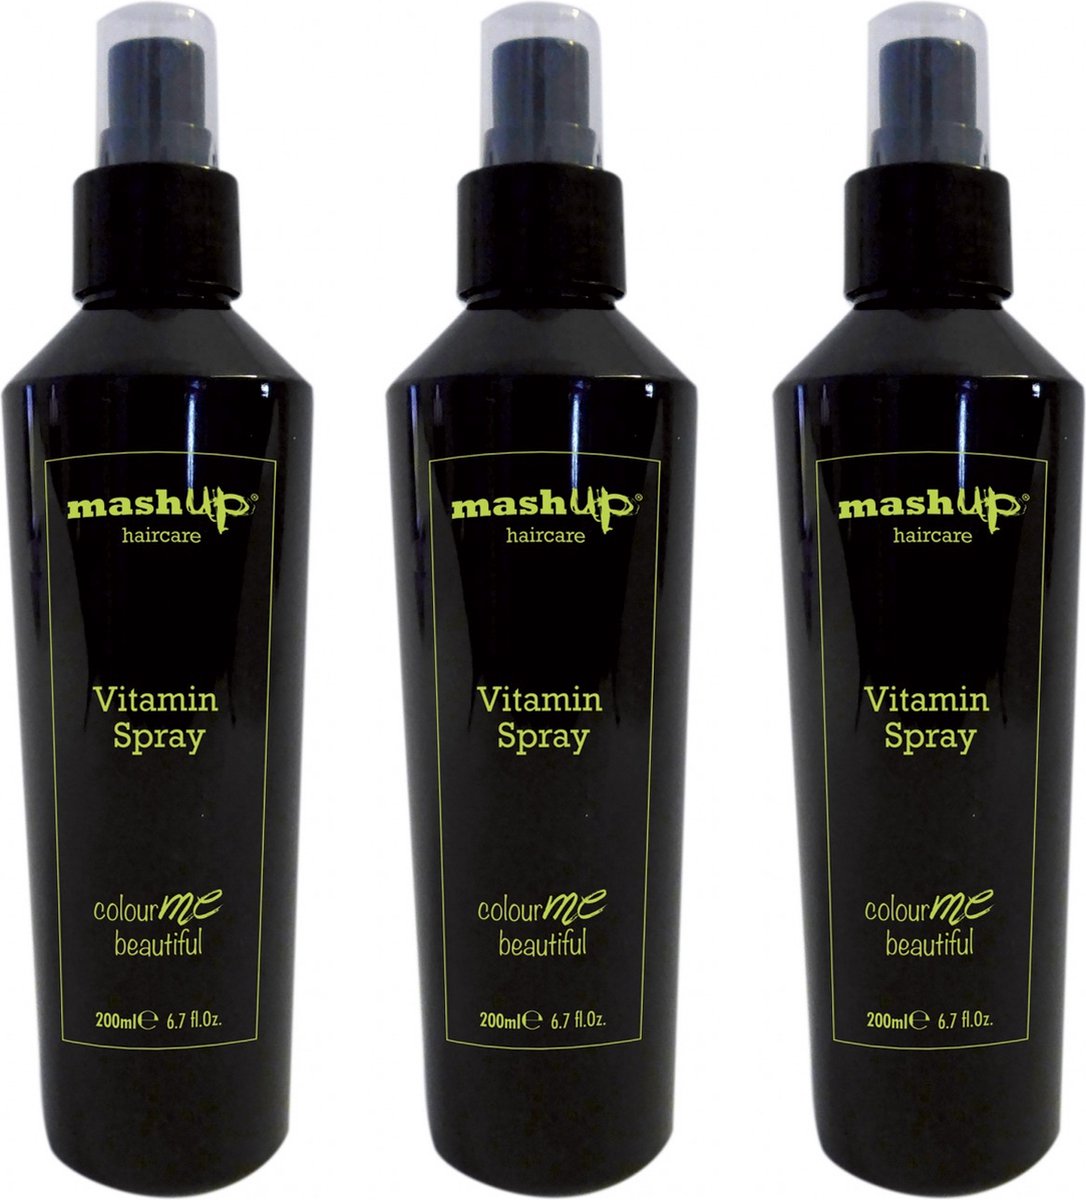 mashUp haircare Colour Me Beautiful Vitamin Spray 200ml - 3 stuks